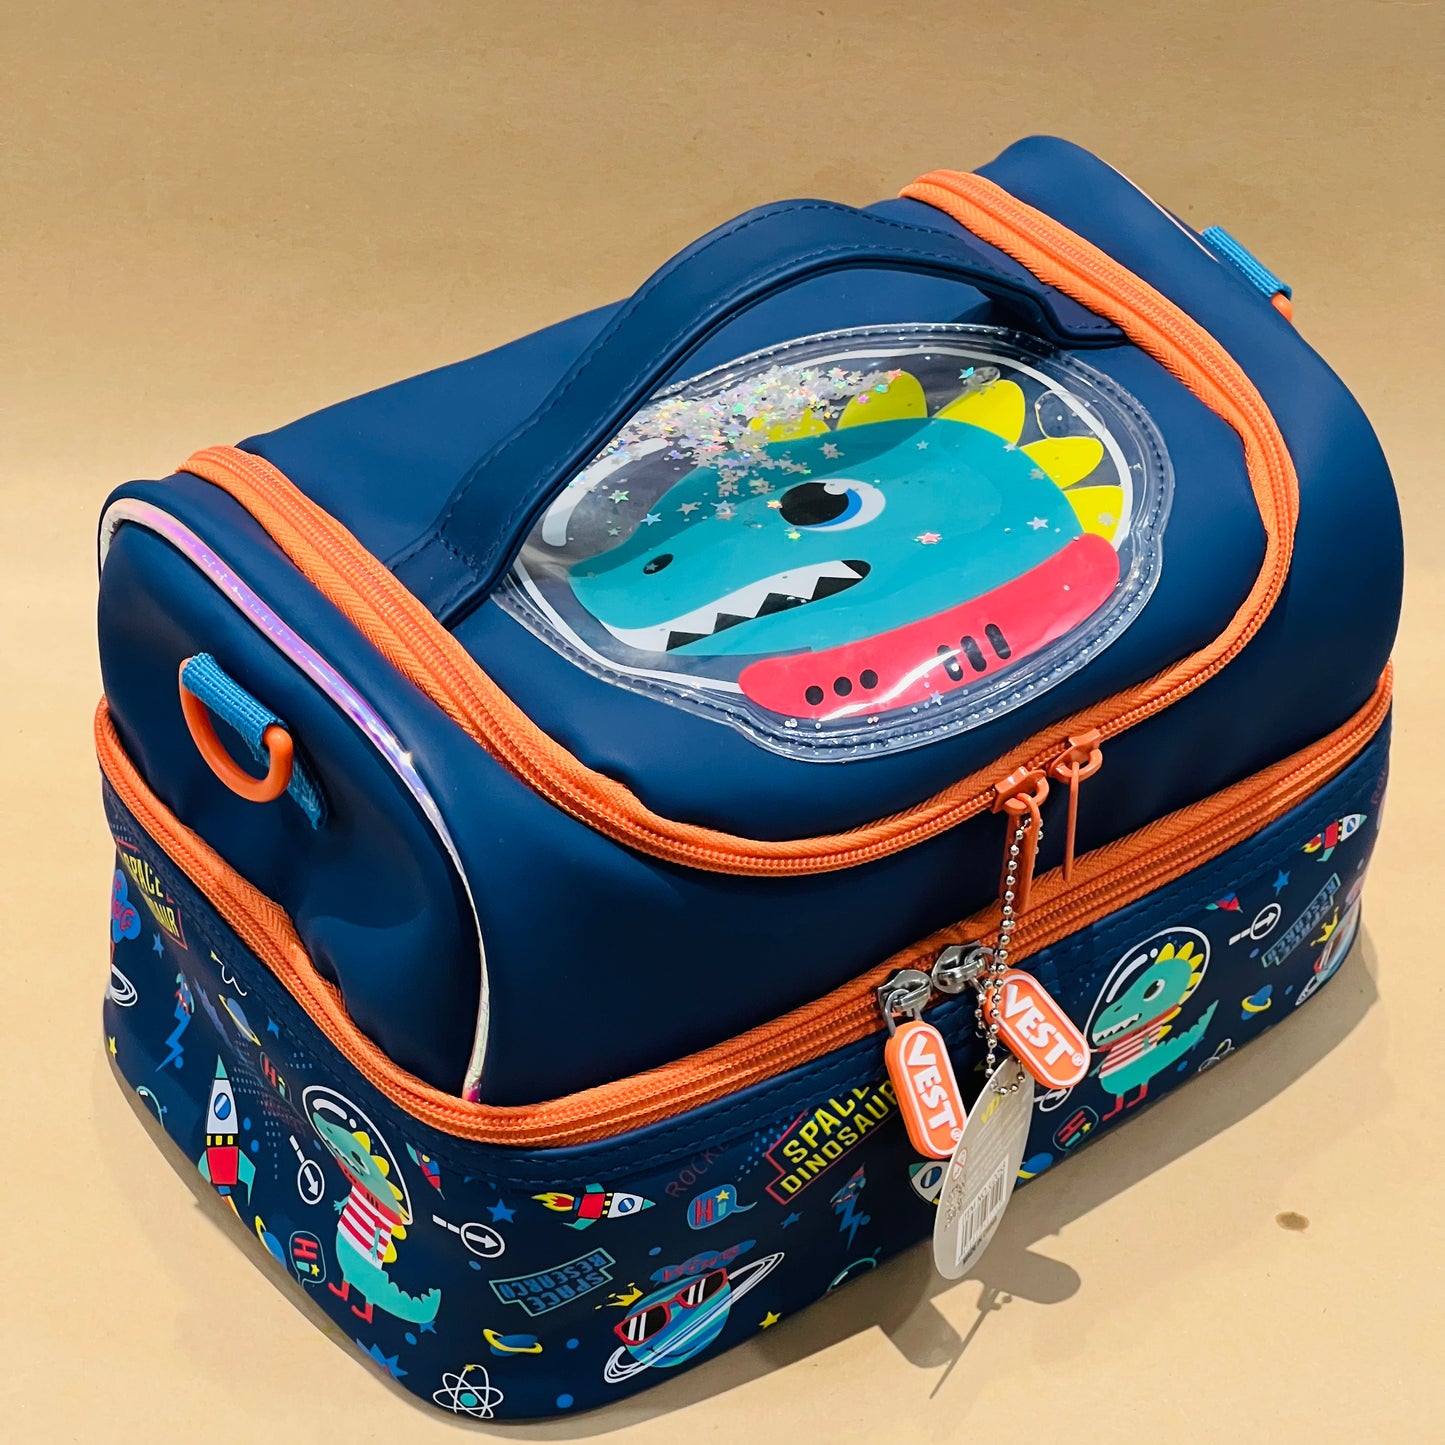 Luxury Double Decker Lunchbag for Kids